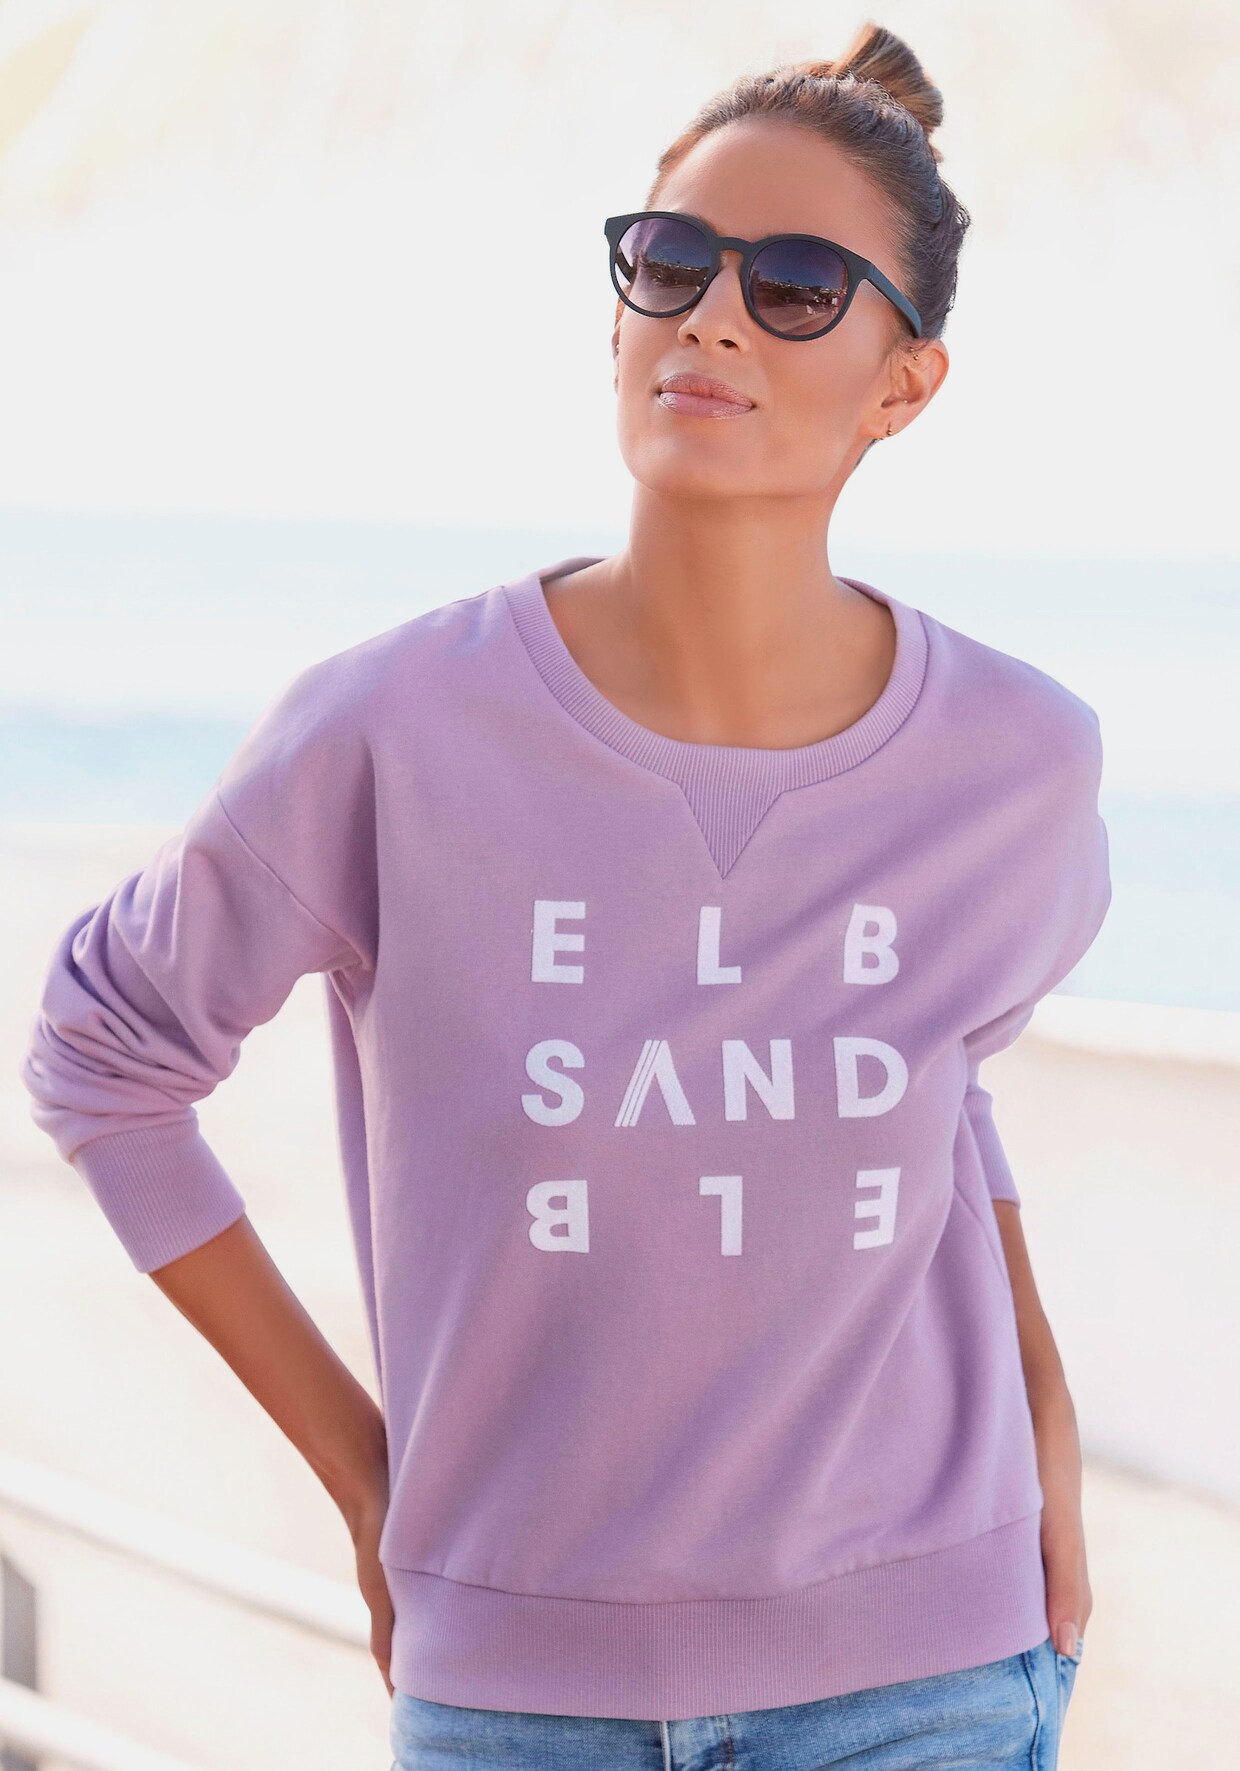 Elbsand Sweat-shirt - lilas